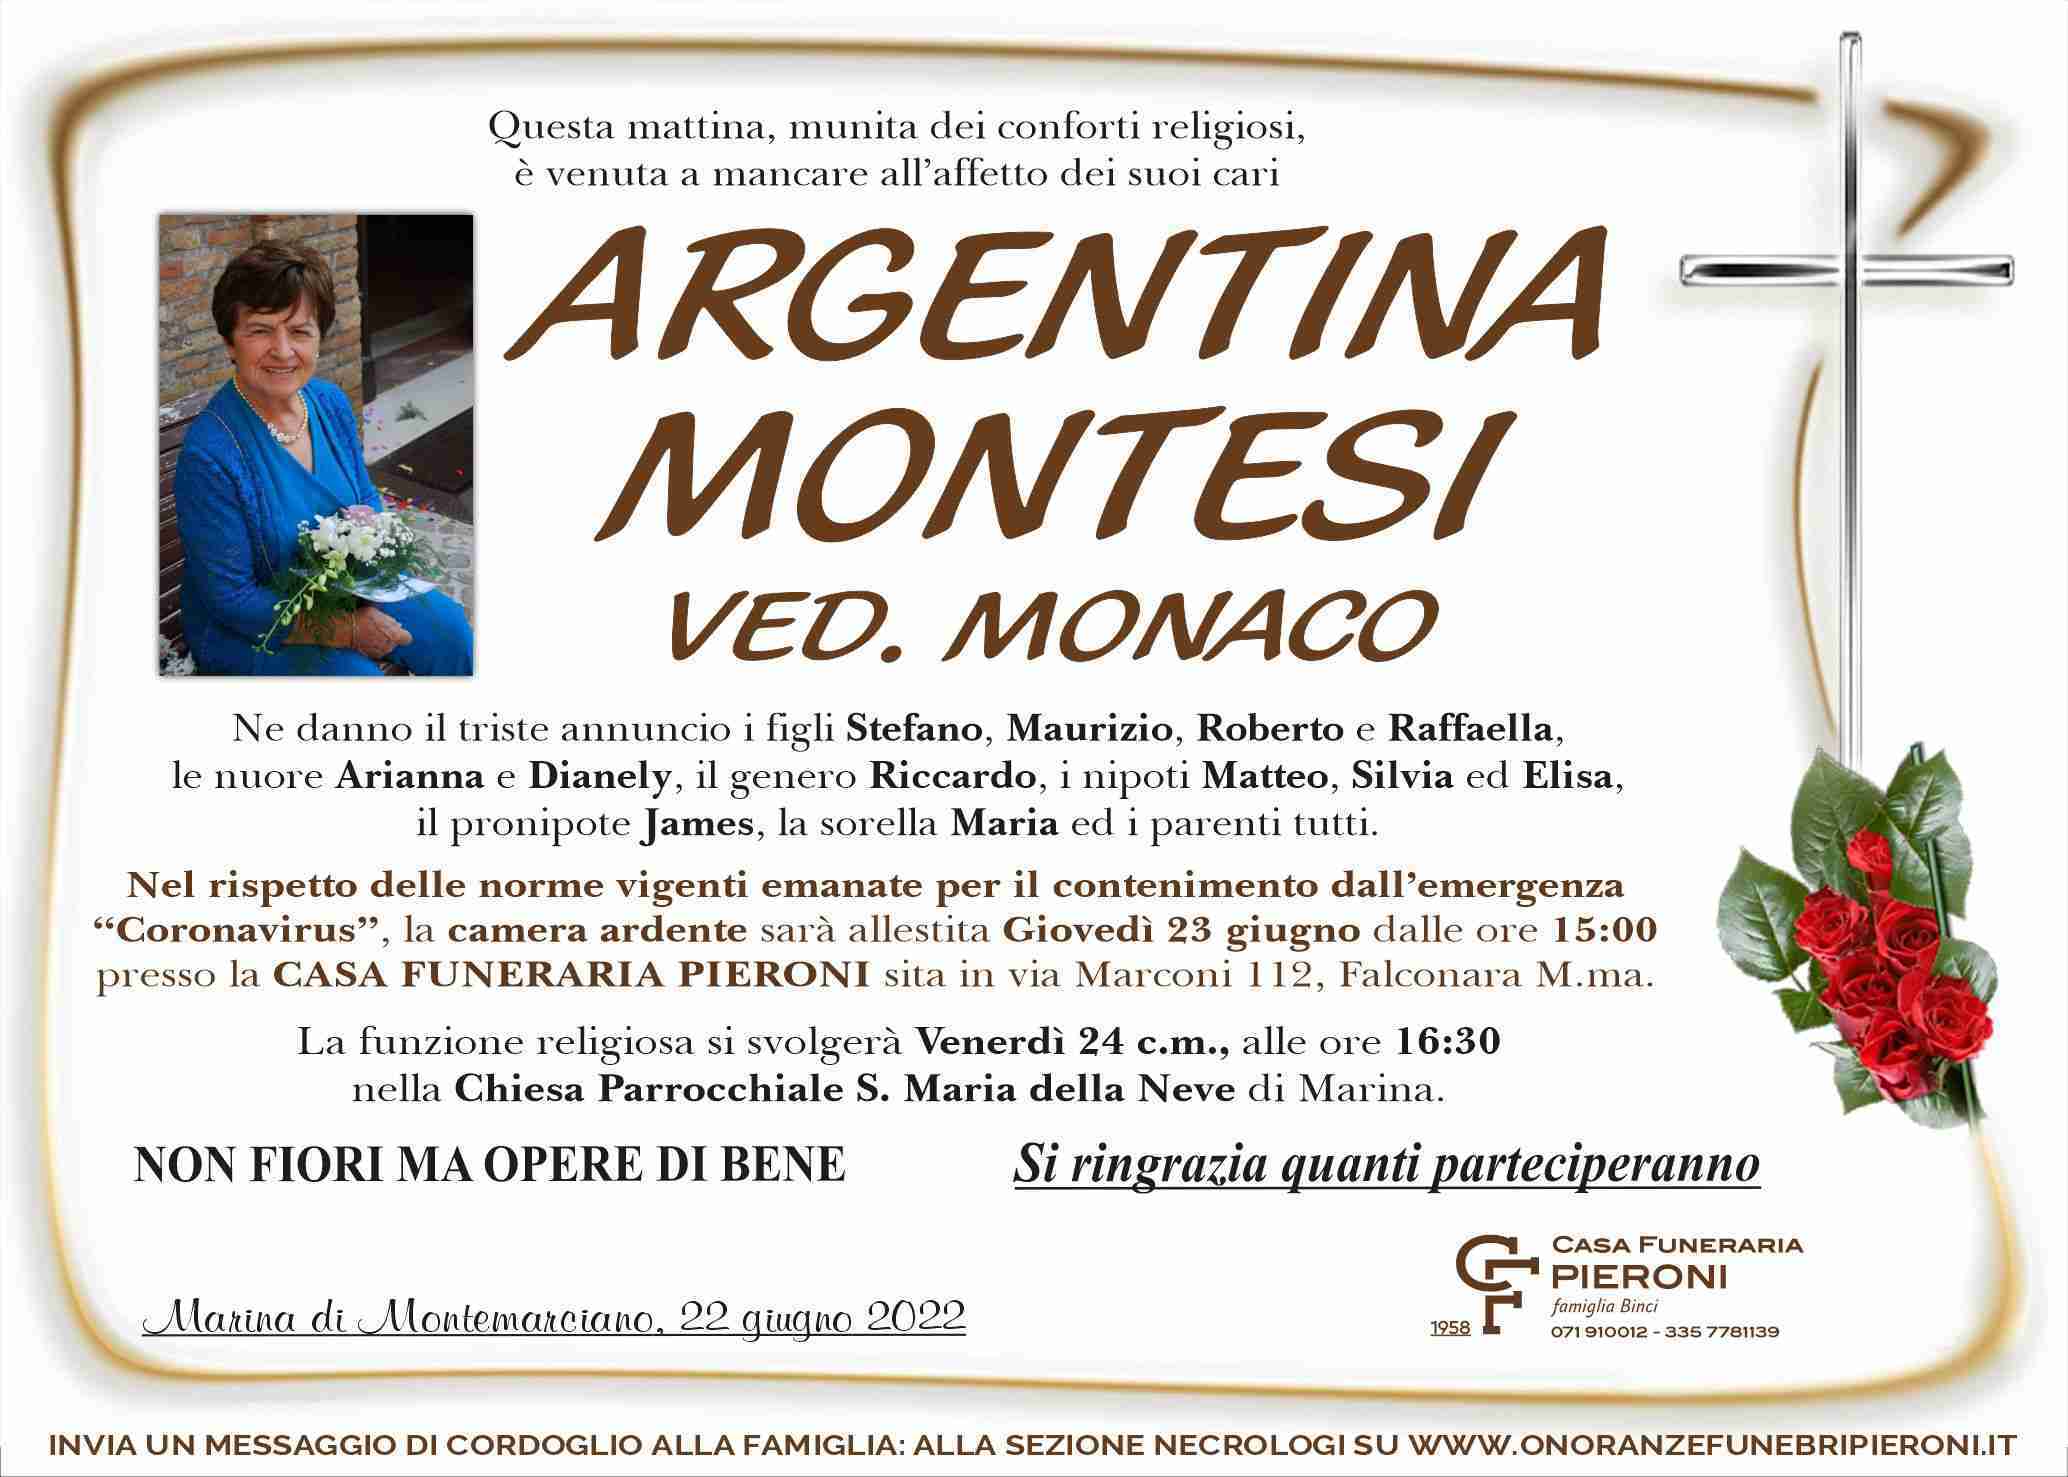 Argentina Montesi